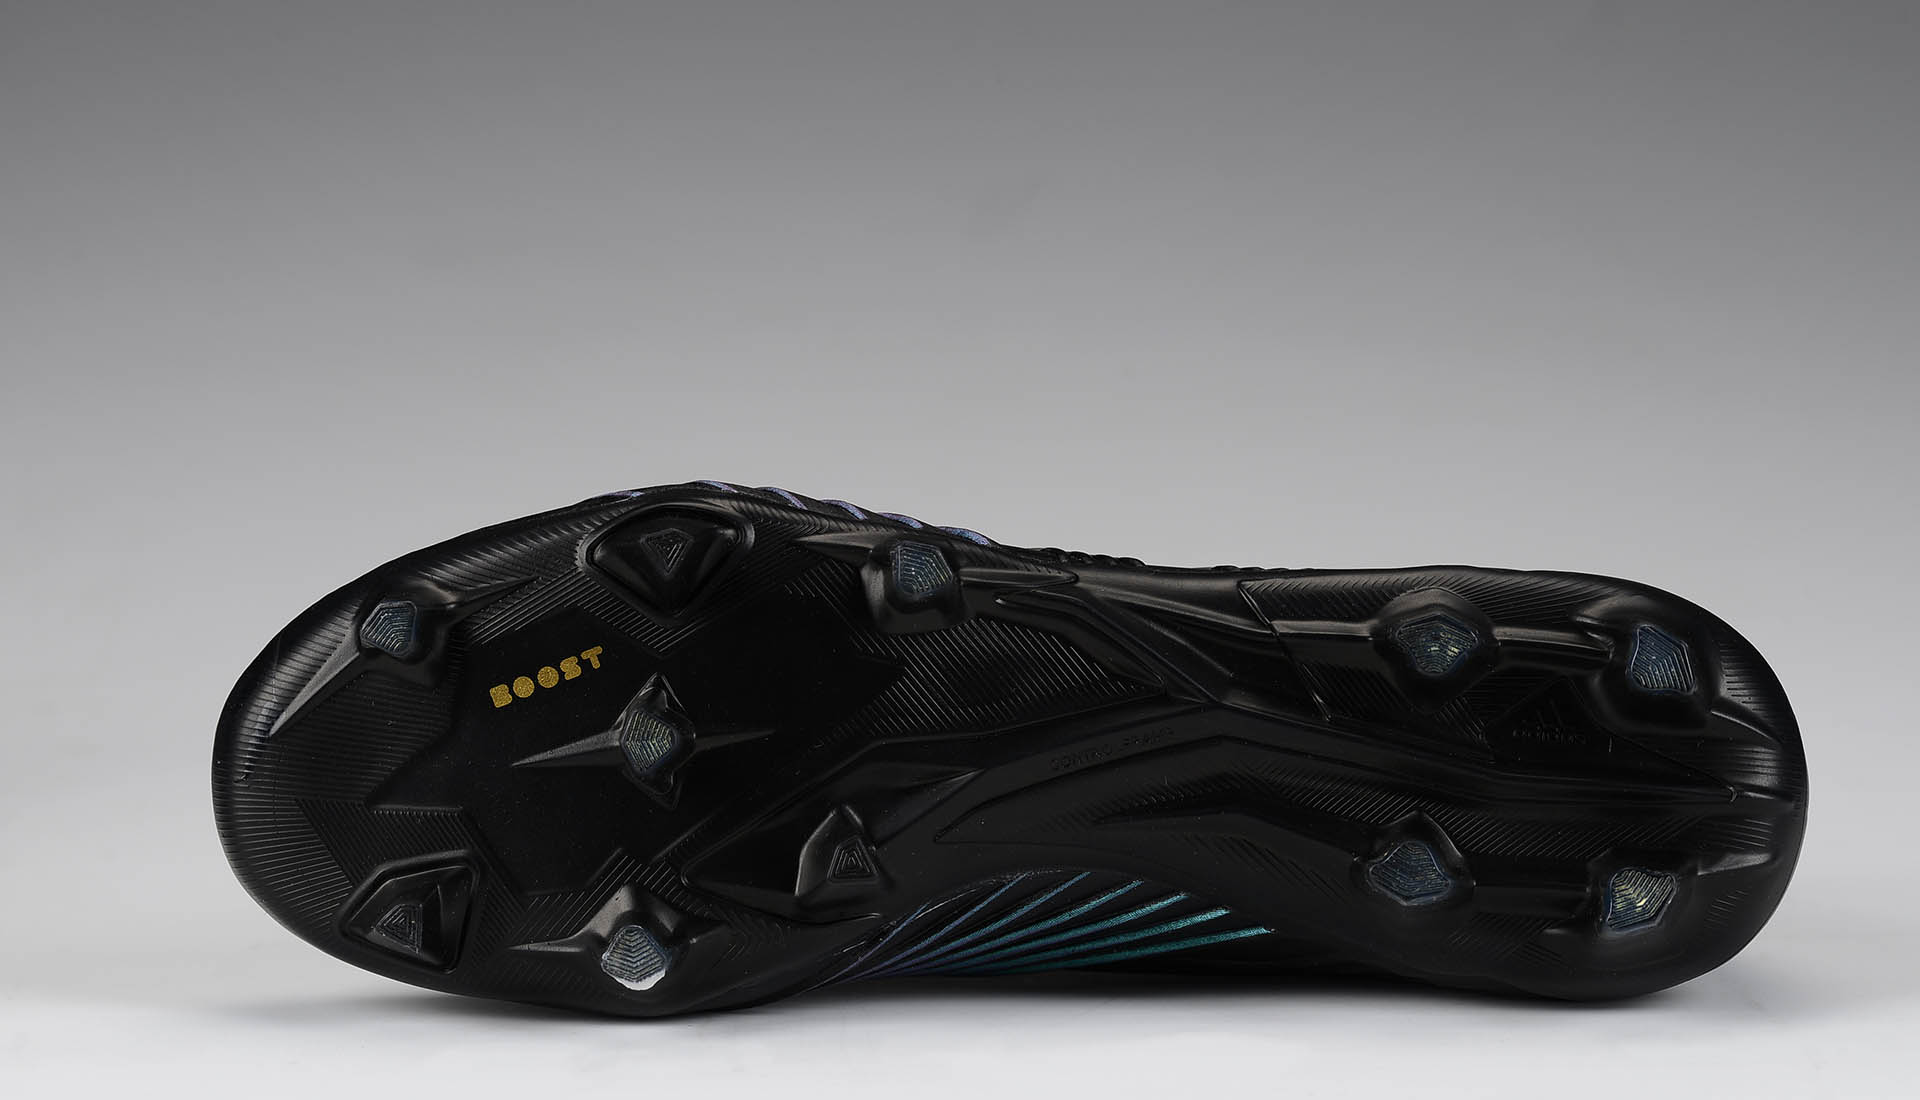 Adidas Predator 19+ FG Triple Black - Sleek and Powerful Football Cleats